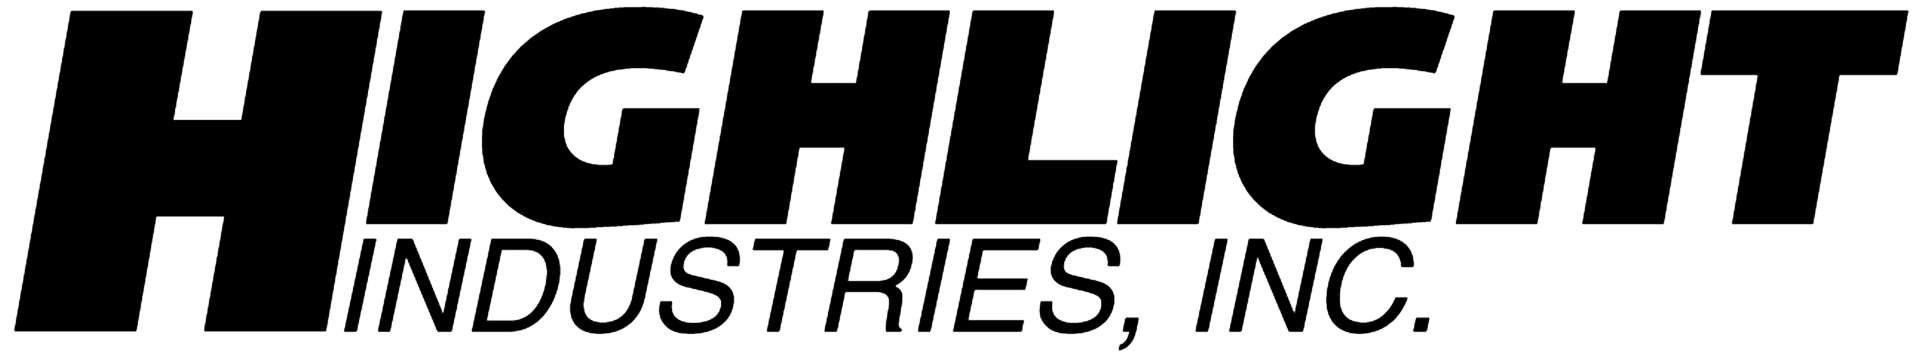 Highlight Industries logo